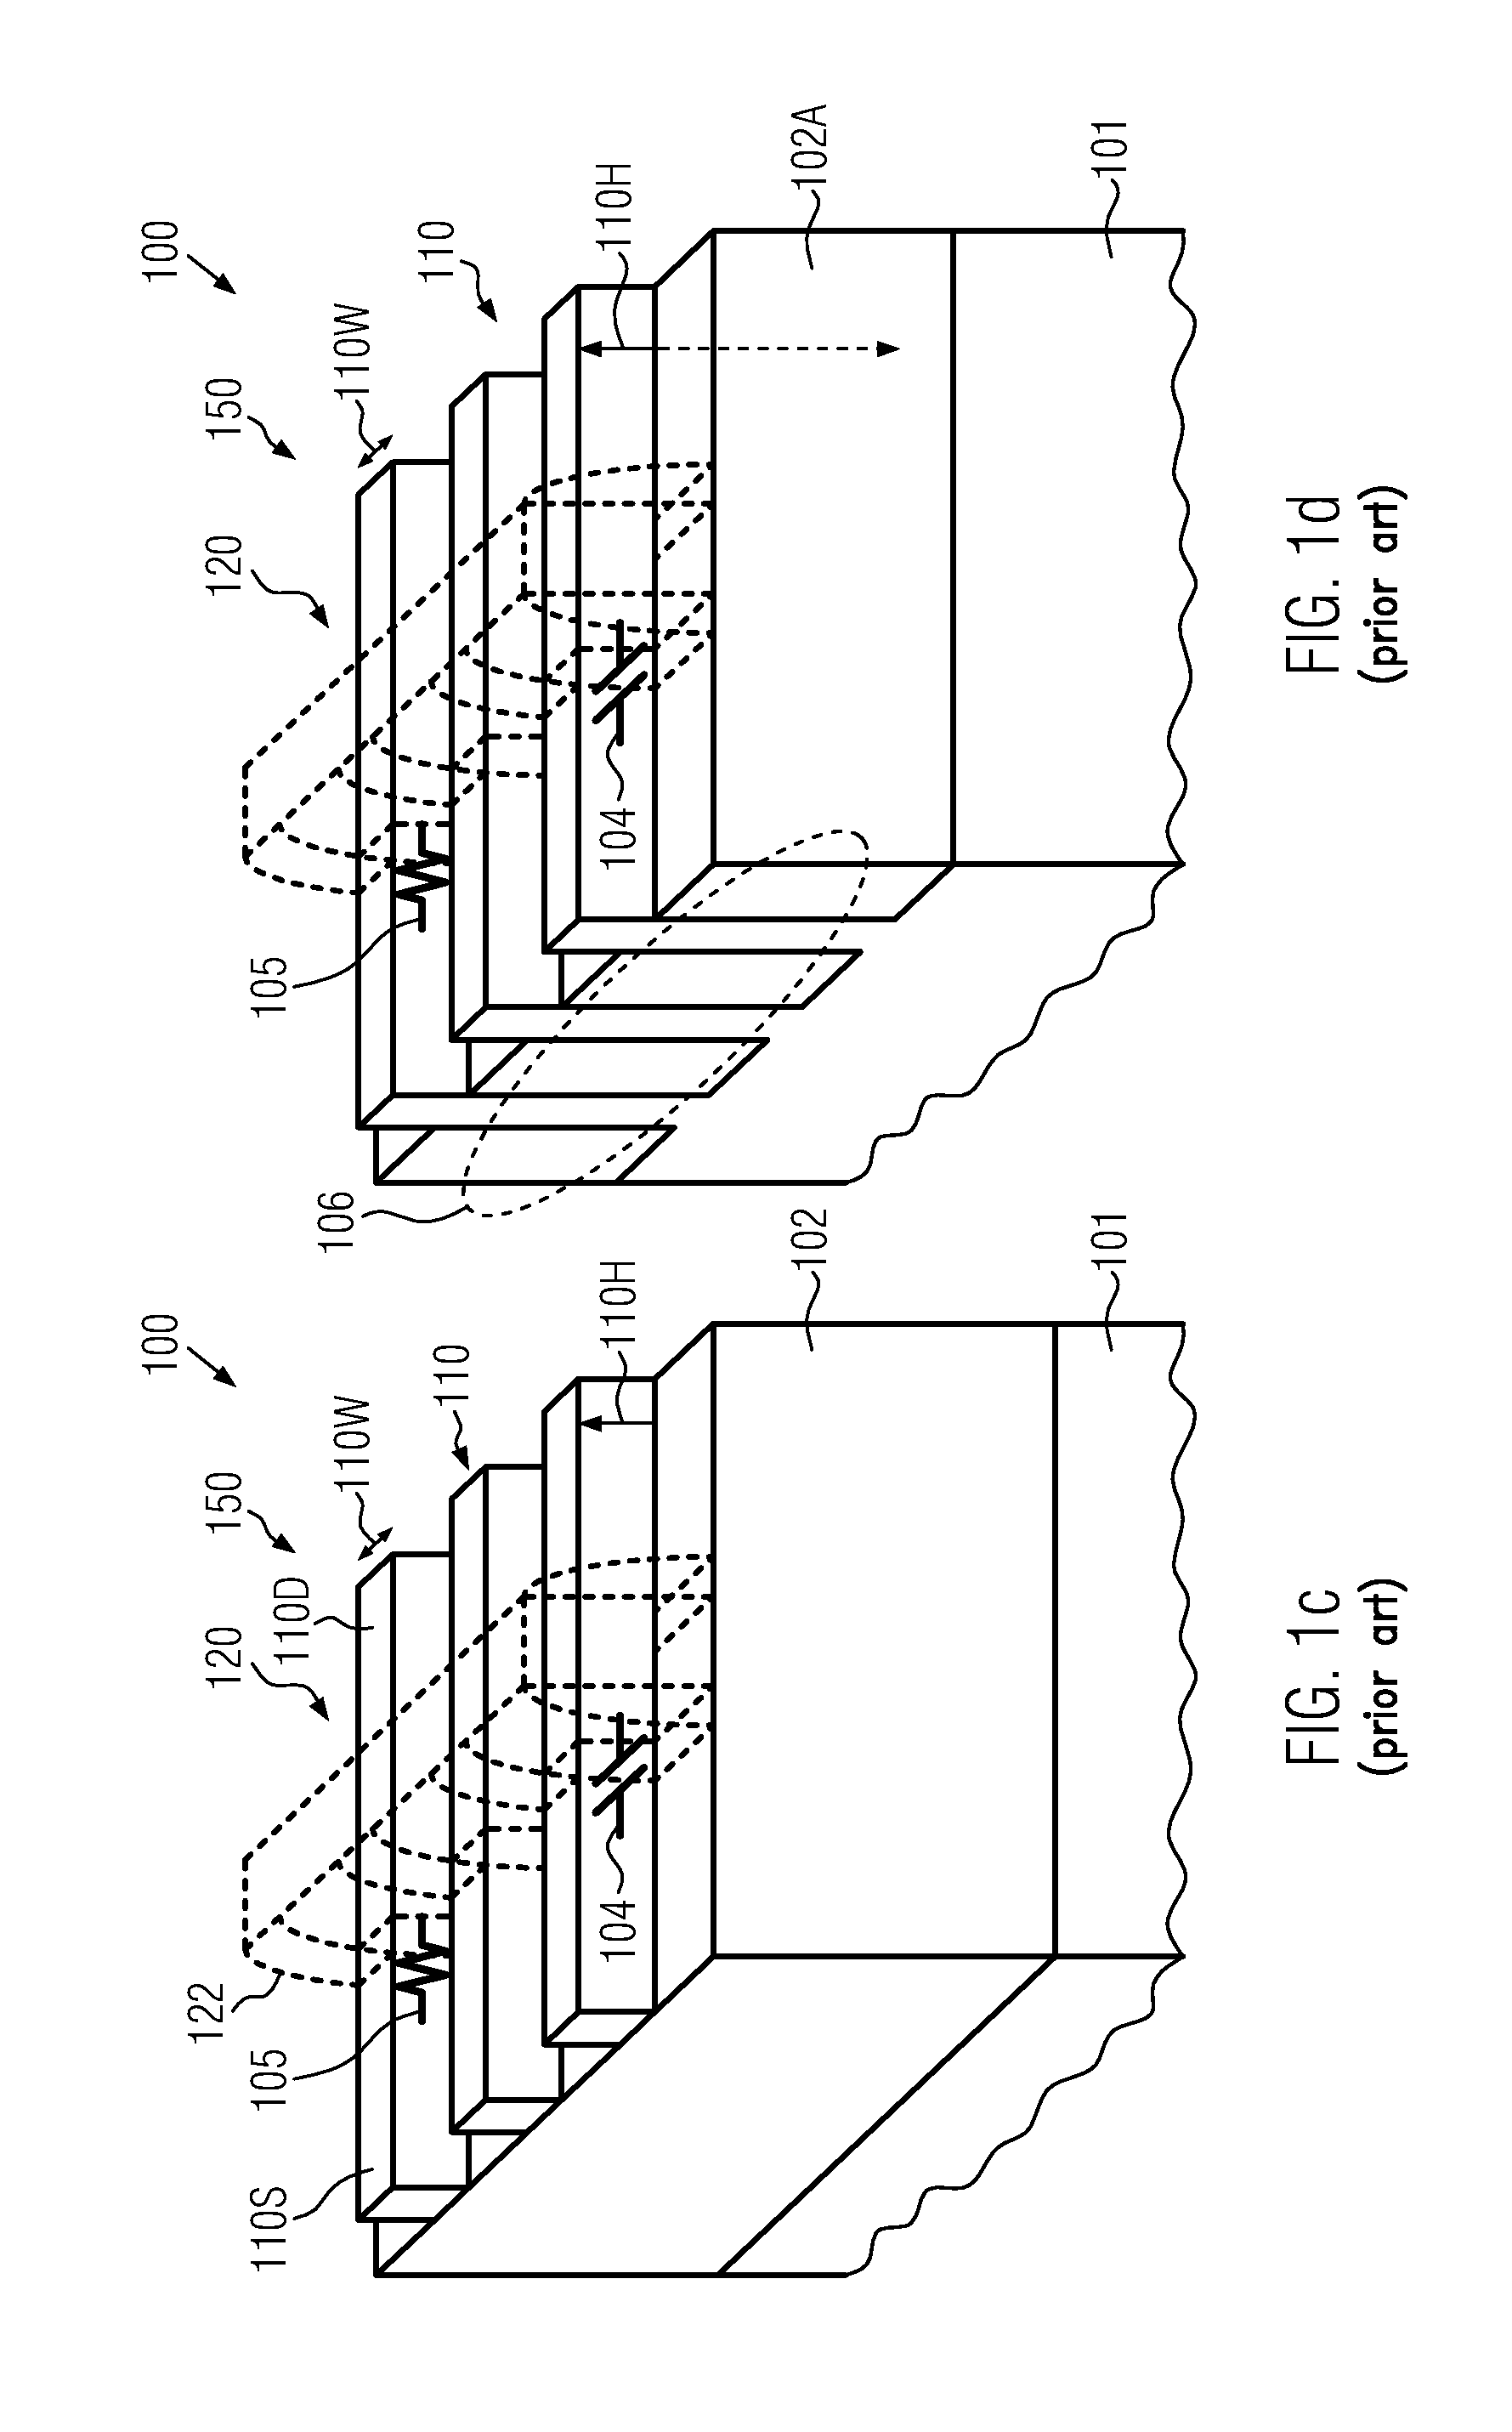 Self-Aligned Multiple Gate Transistor Formed on a Bulk Substrate